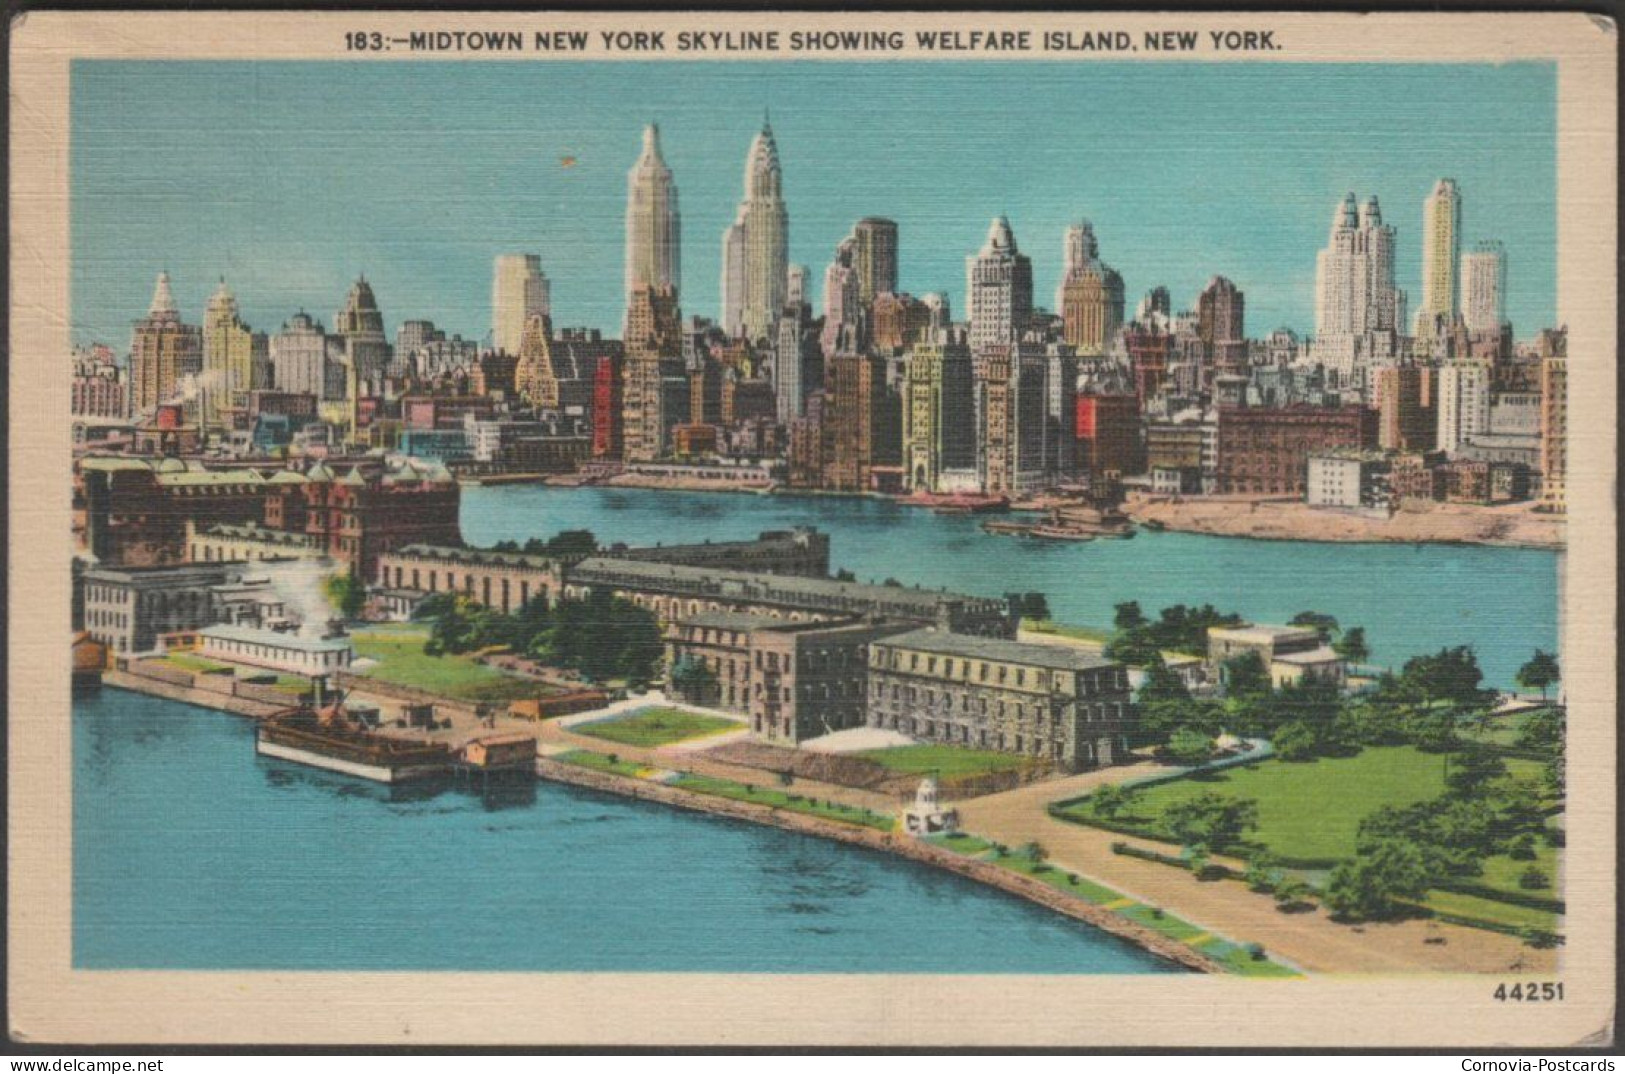 Midtown New York Skyline Showing Welfare Island, New York, 1942 - Manhattan PCP Co Postcard - Panoramic Views